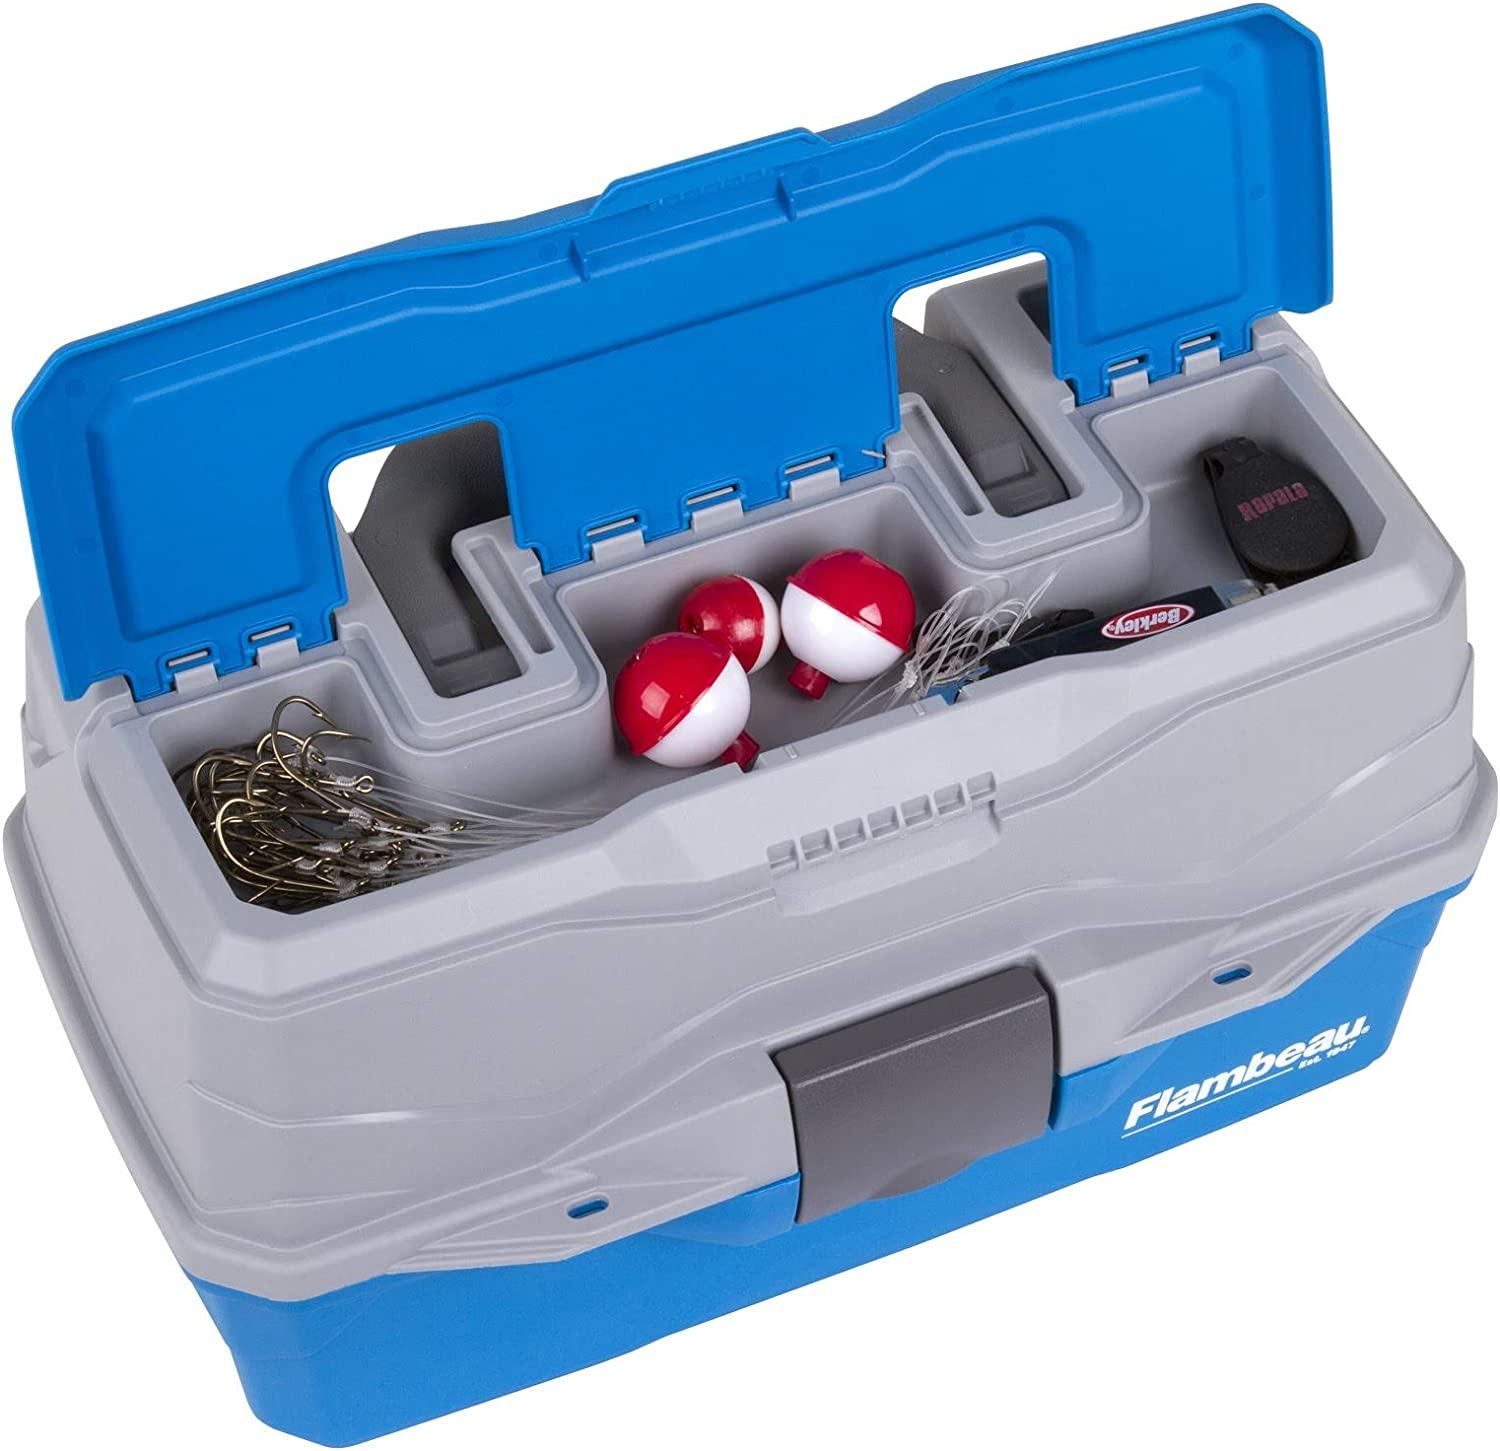 Flambeau Outdoors Tray Classic Tray Tackle Box, Portable Tackle